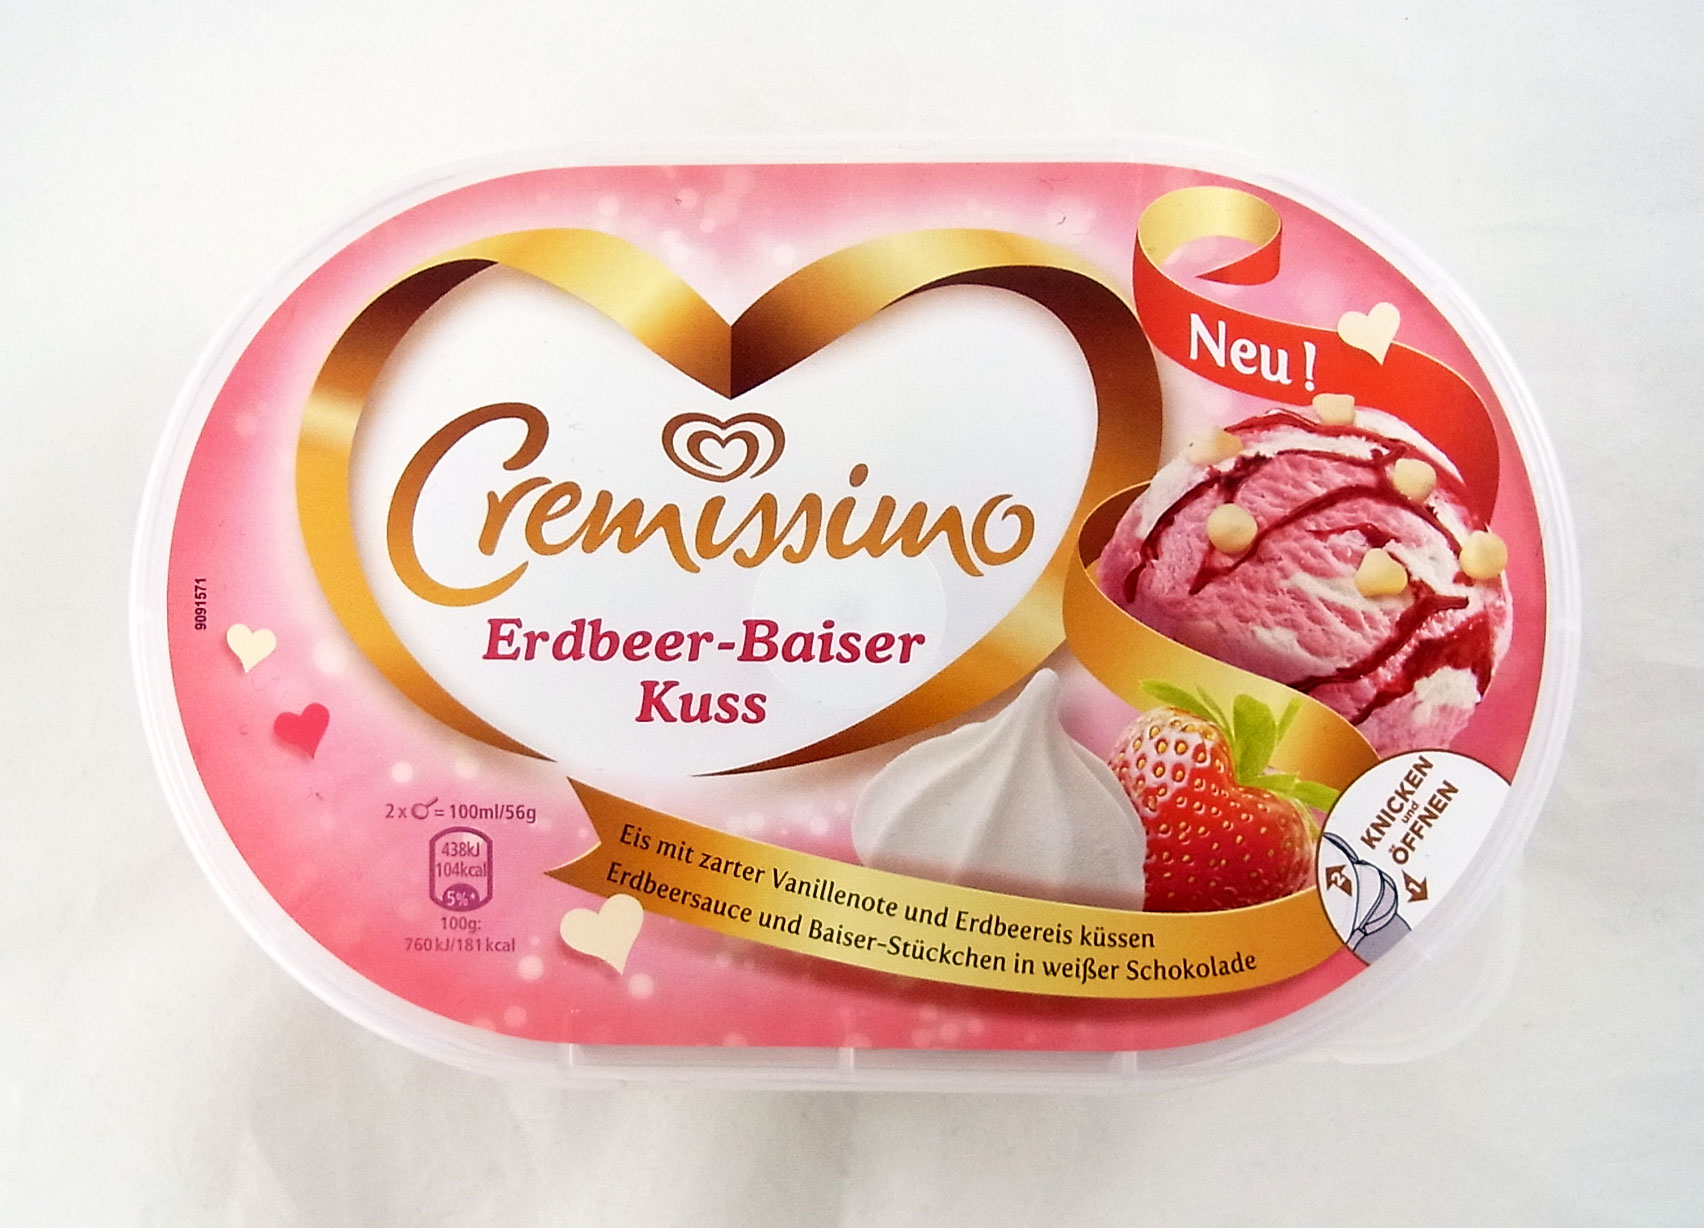 Langnese Cremissimo Erdbeer-Baiser Kuss Lebensmittelklarheit 